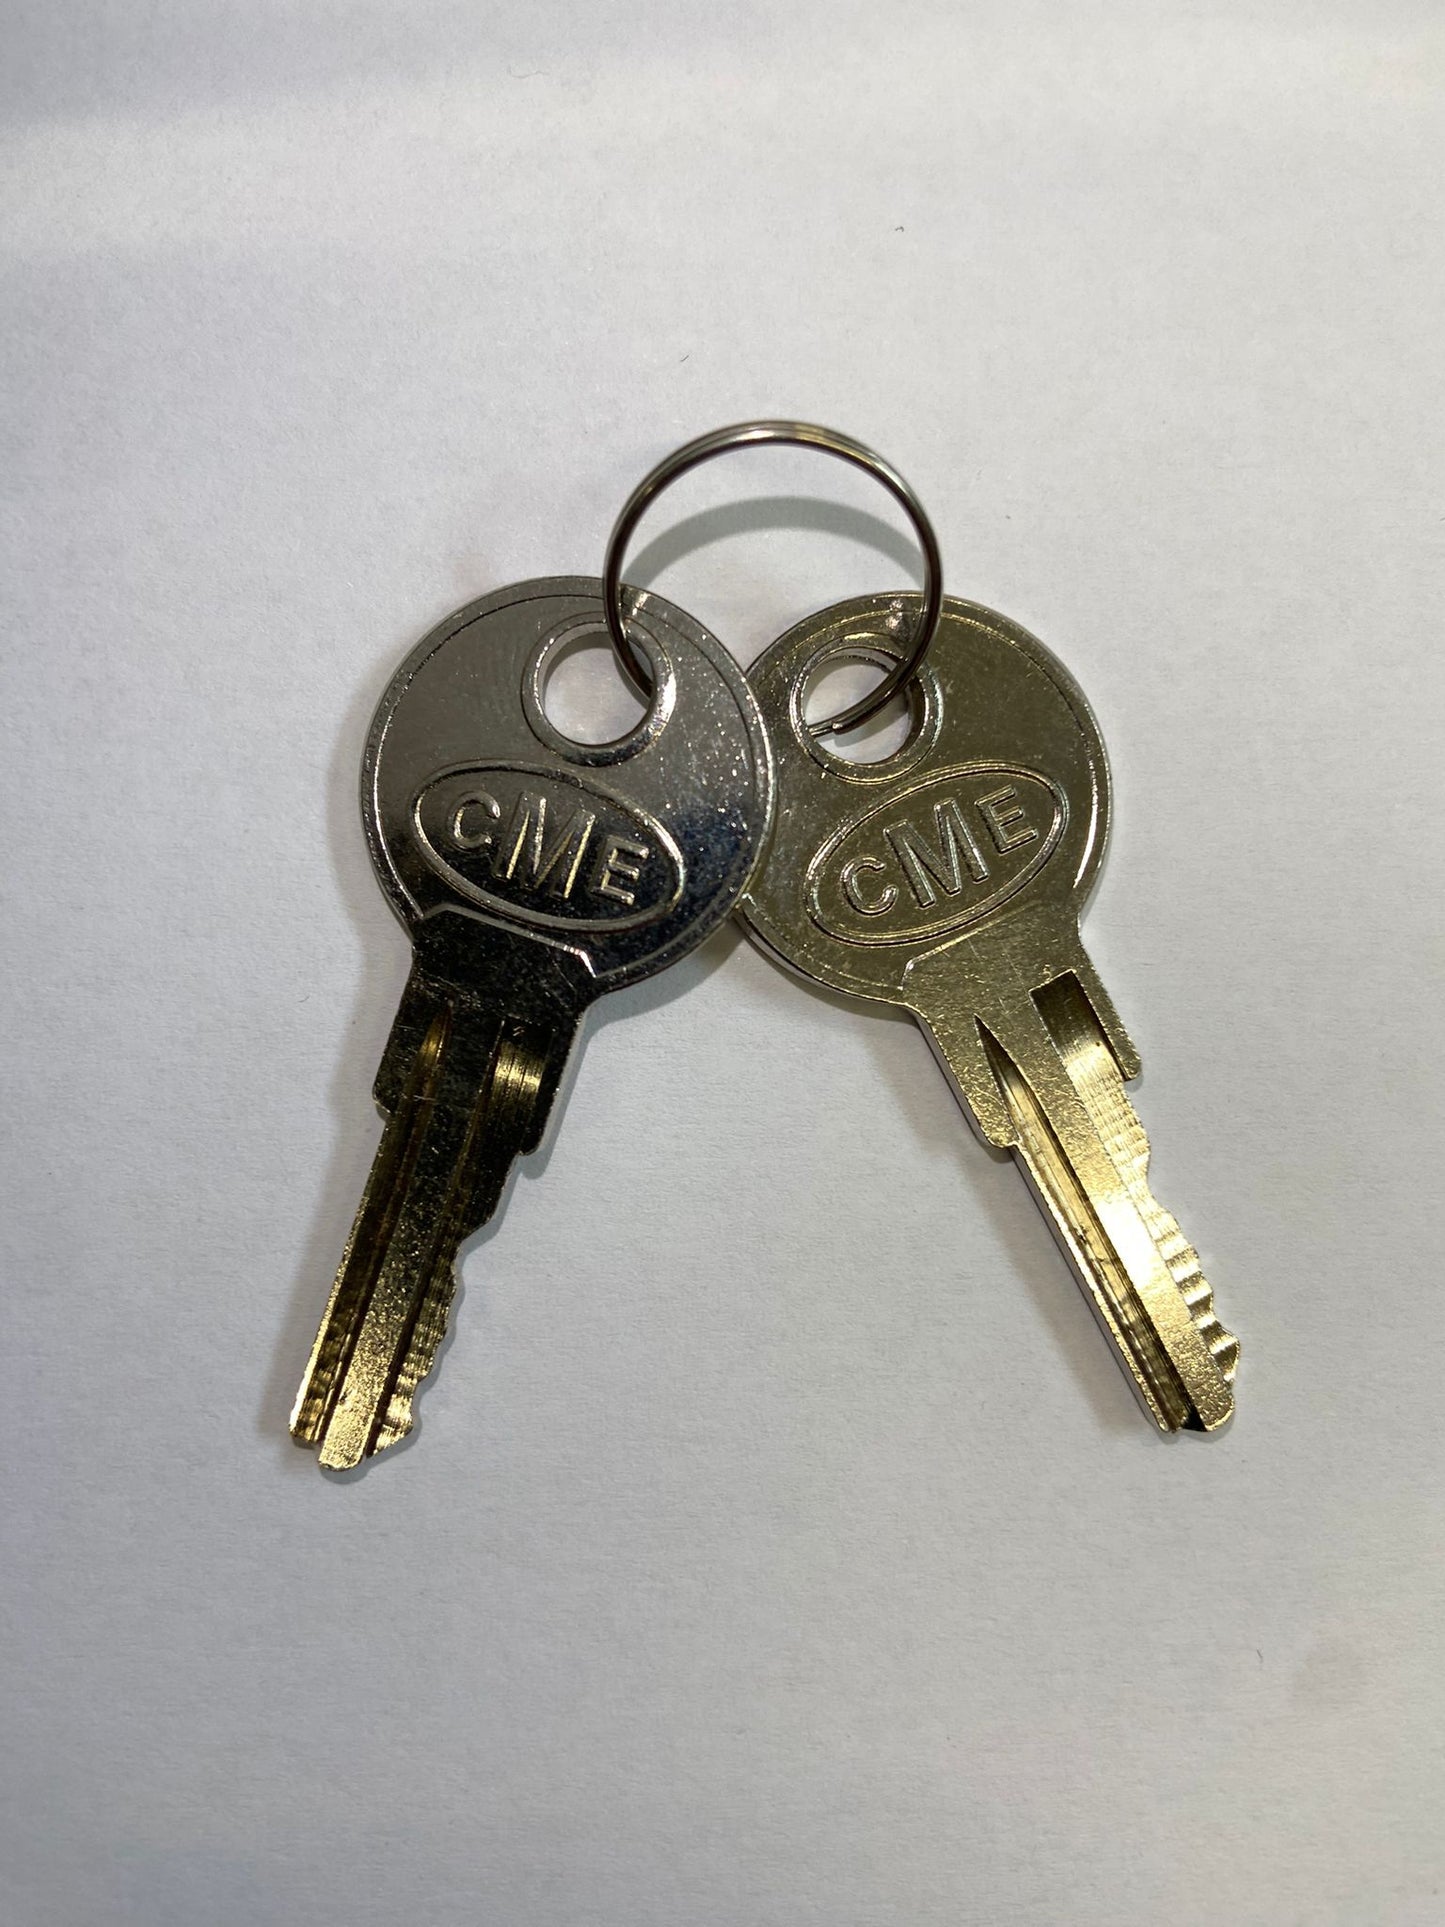 Spare set of x2 T34 lockbox keys